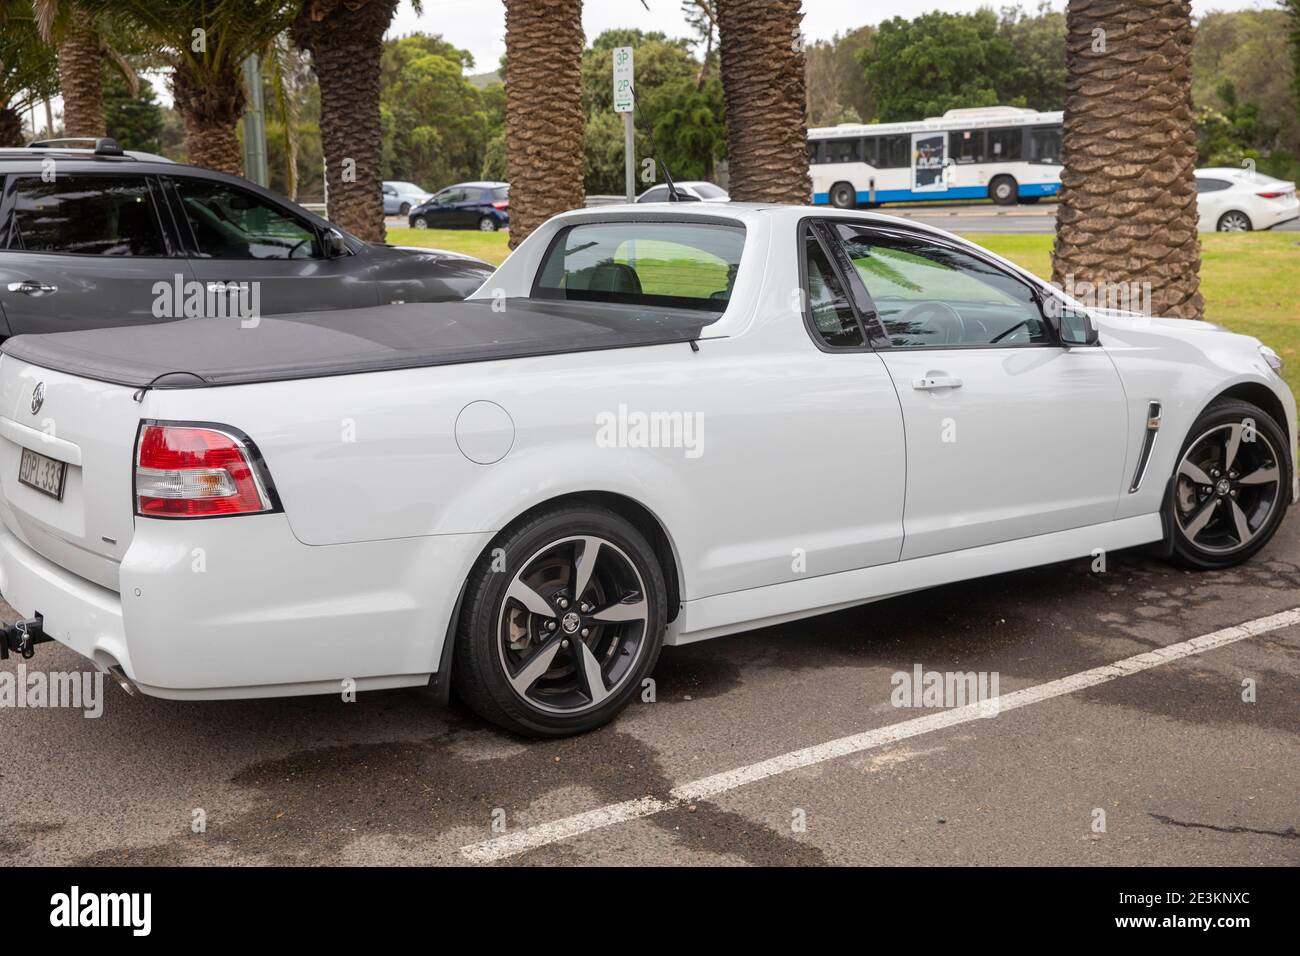 2017 White Holden Ute vehicle parked in Sydney,Australia Stock Photo